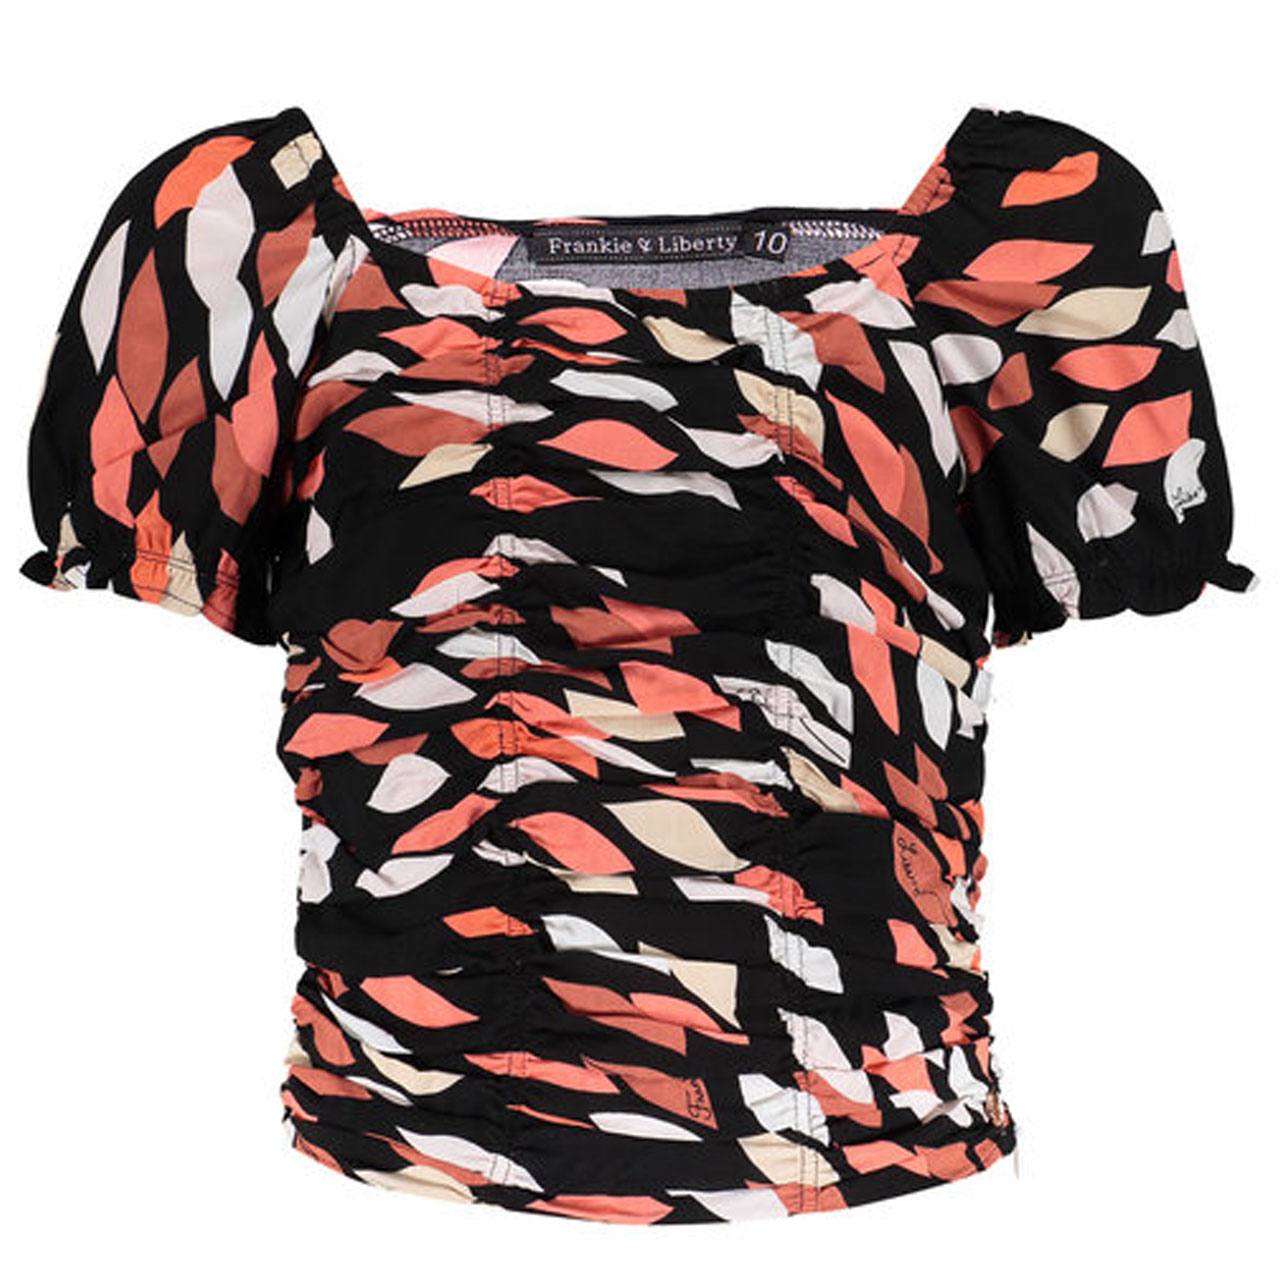 Frankie & Liberty Tara blouse dessin - Tops & Singlets - Shirts - Meisjes - Irma Mode